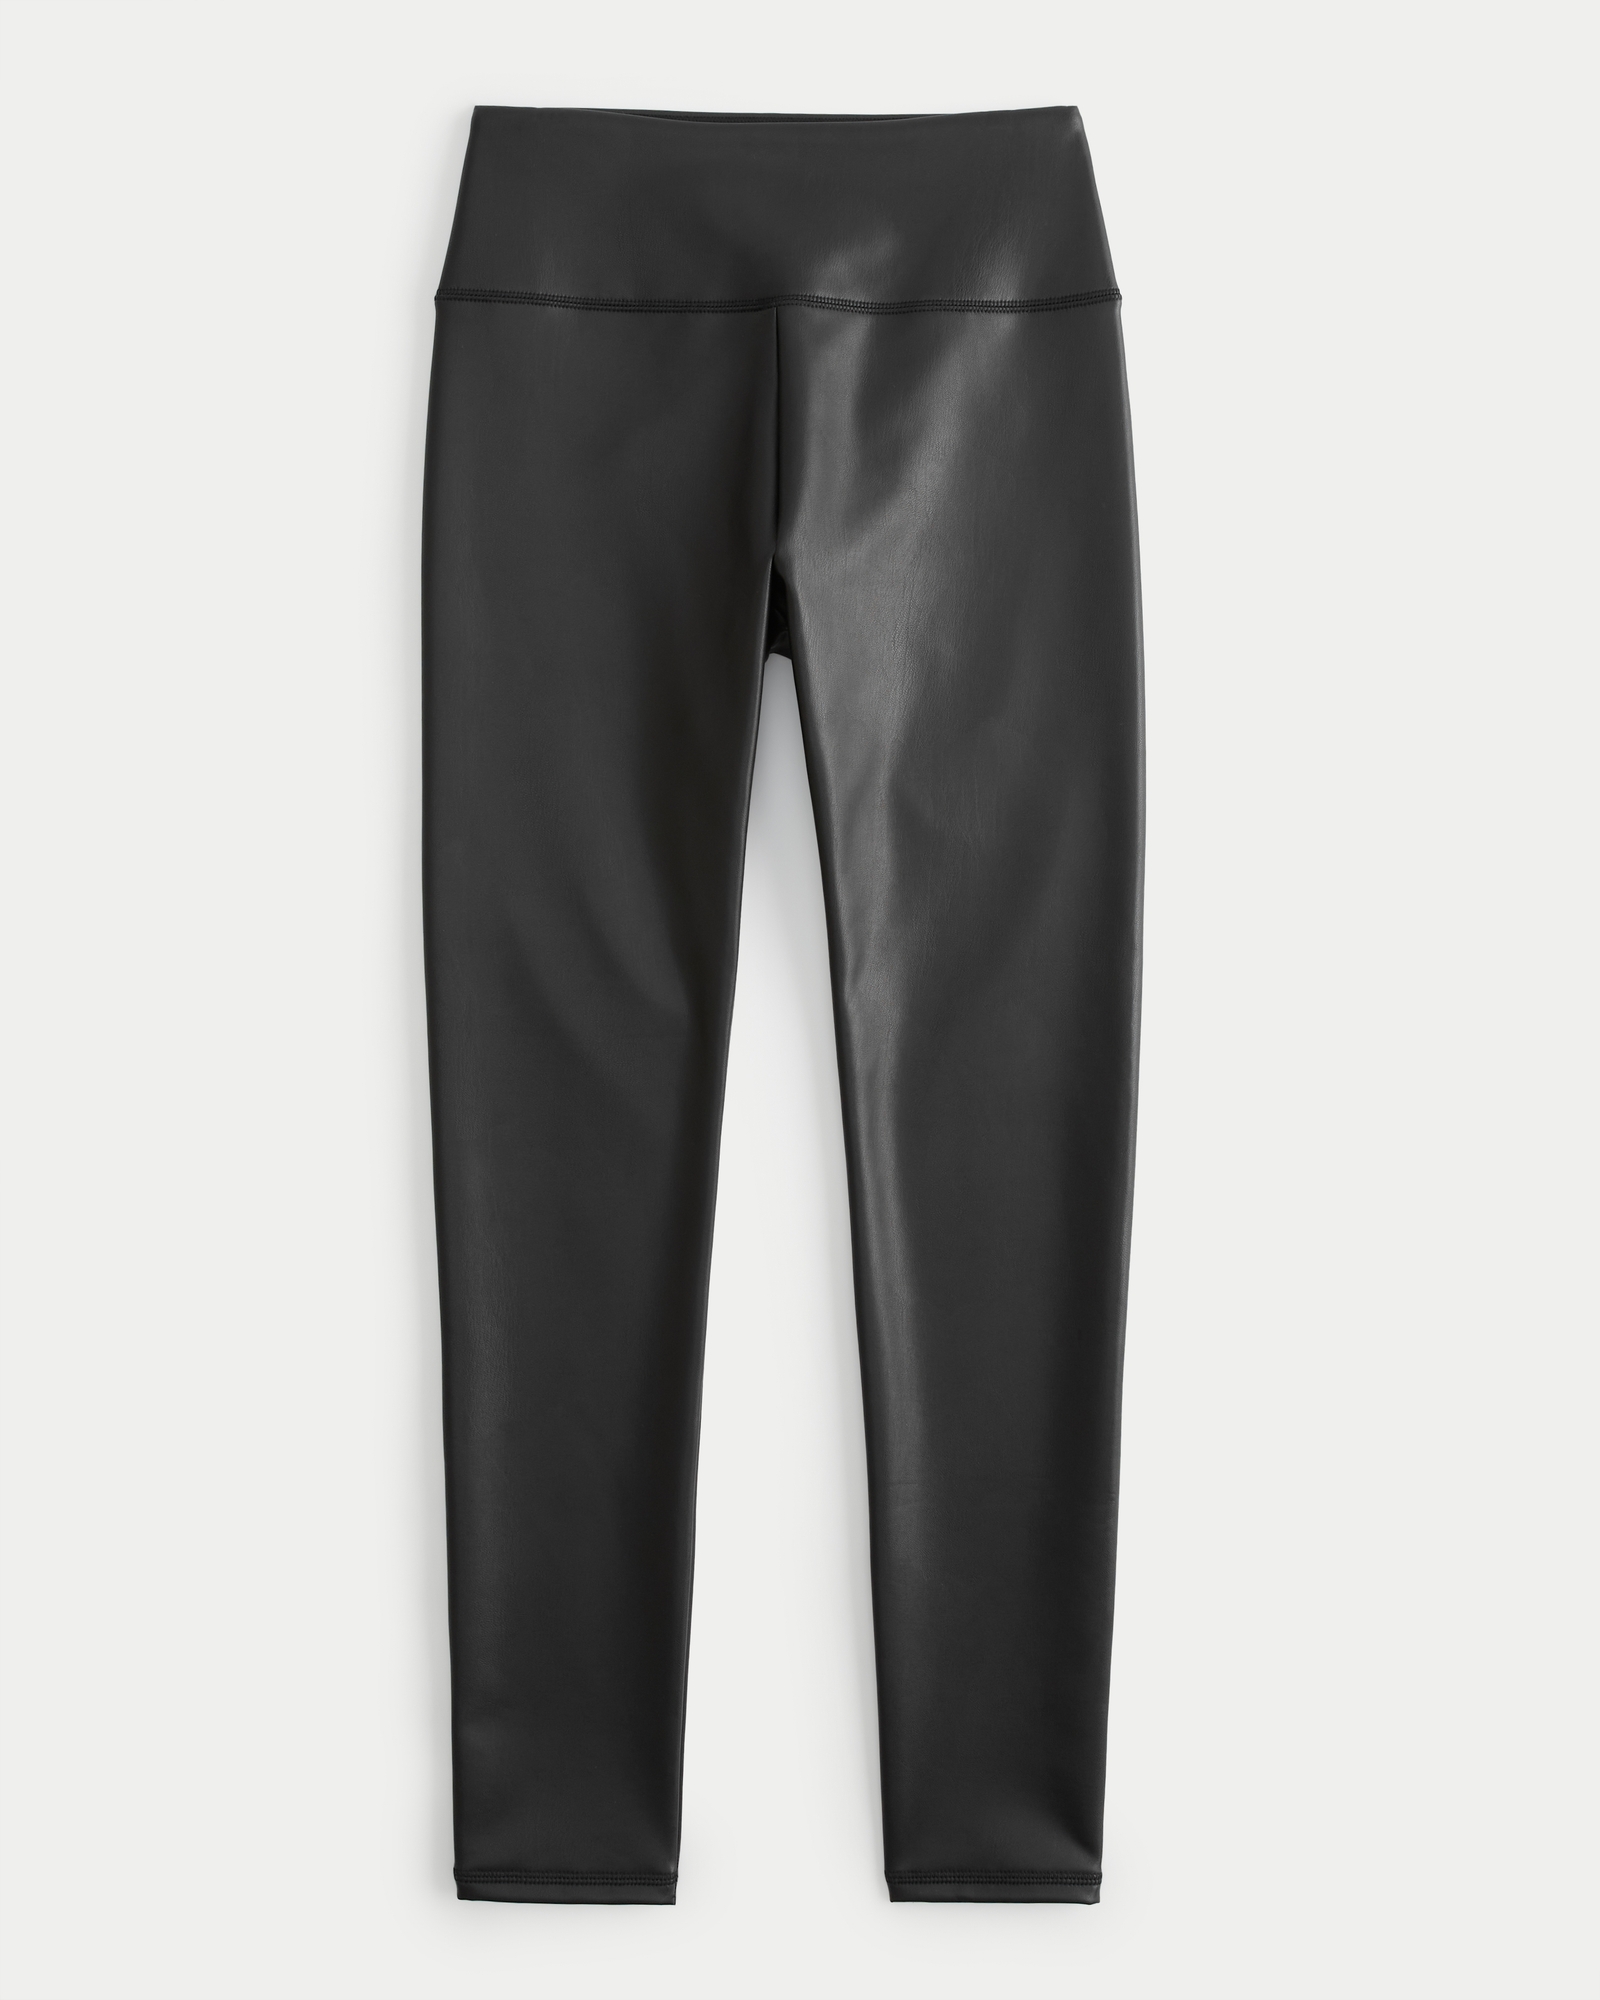 Latex Leggings - 10/10 curves? 🖤 High waist leather leggings at l